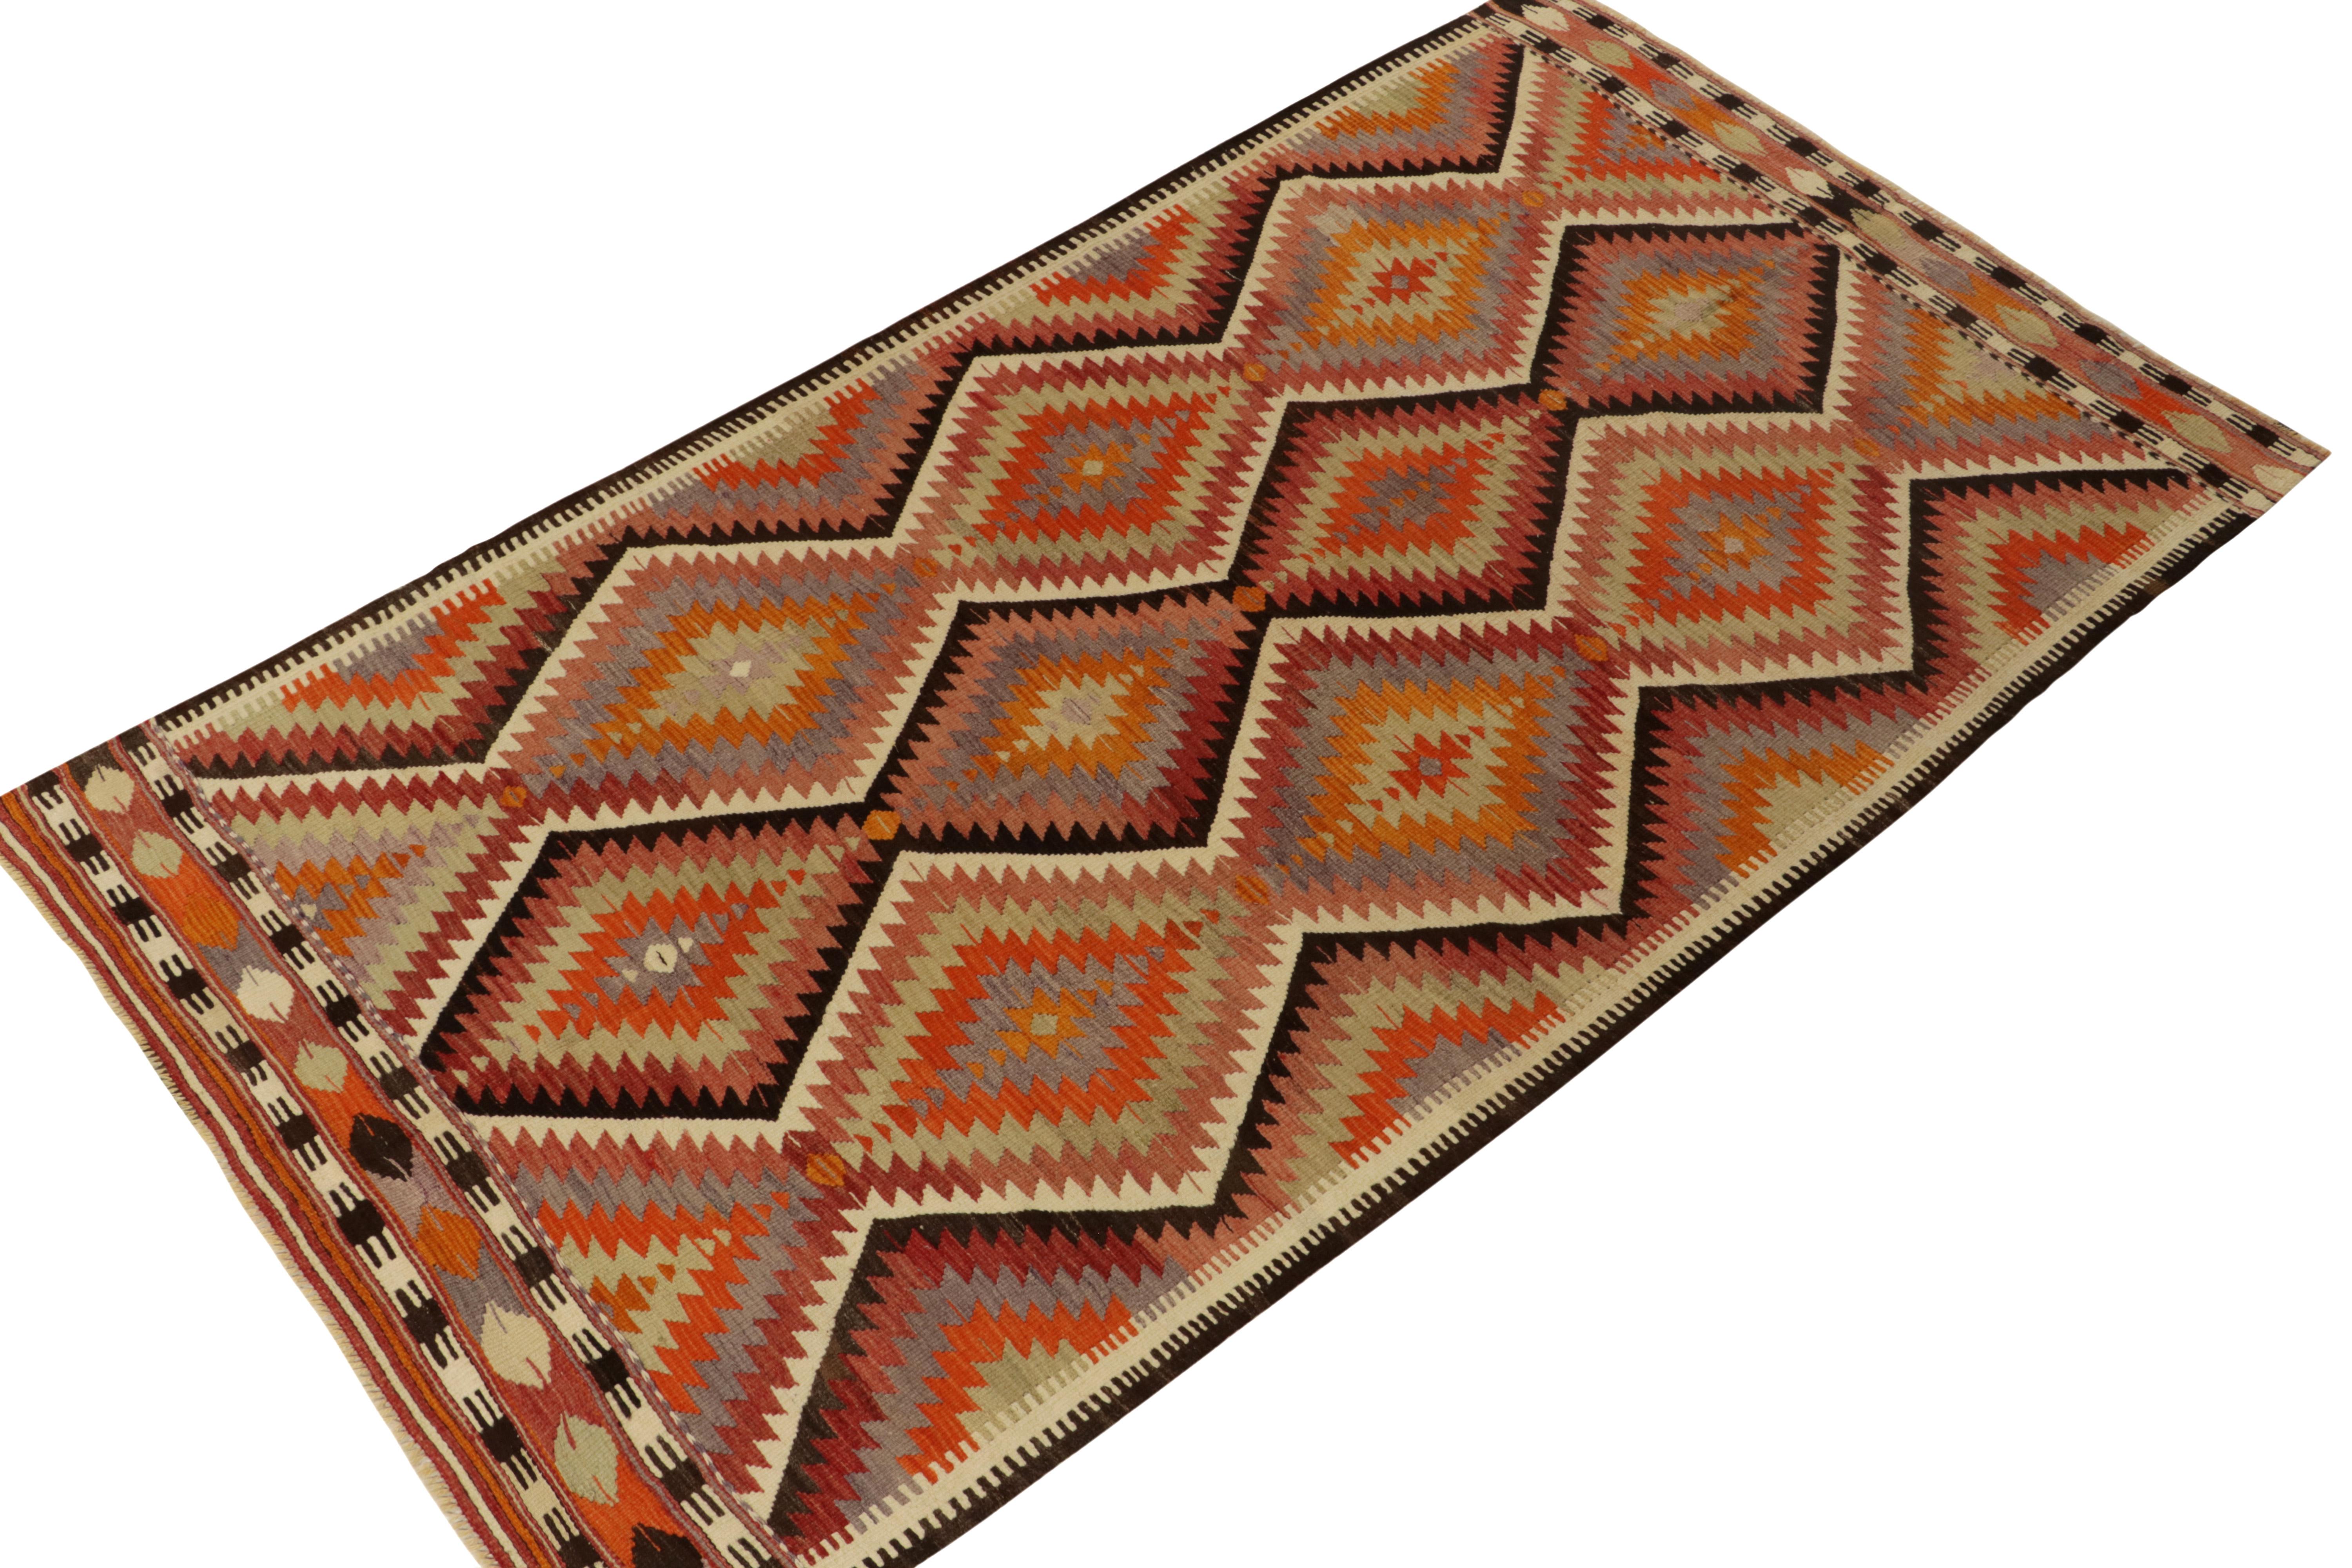 Hand-Woven 1950s Vintage Turkish Kilim rug in Green Orange Geometric Pattern